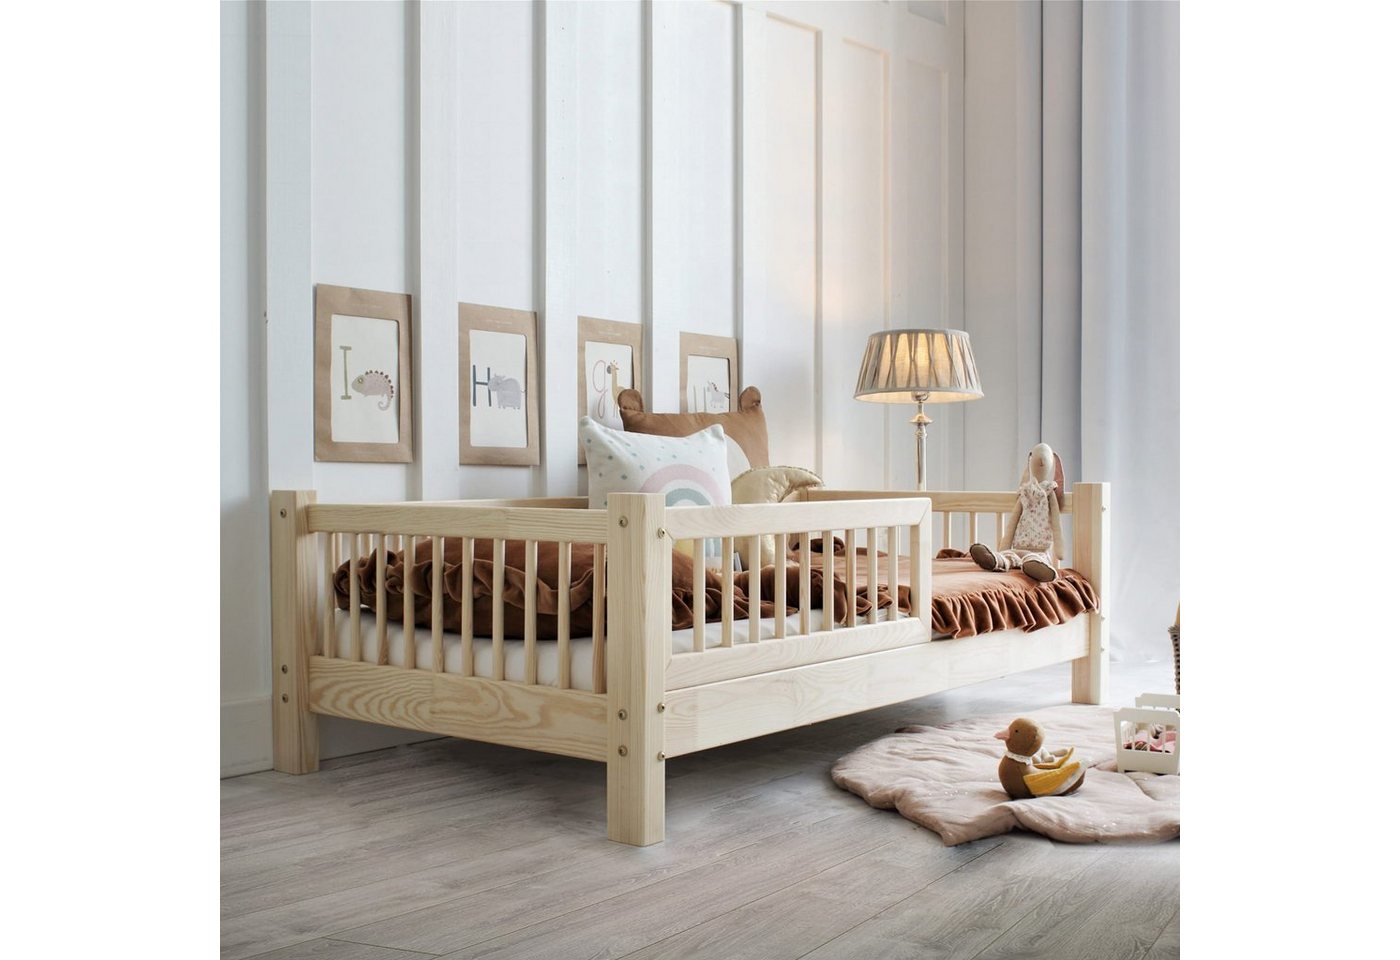 DB-Möbel Kinderbett Kinderbett CLASSIC Lattenrost und Rausfallschutz in Naturholz von DB-Möbel